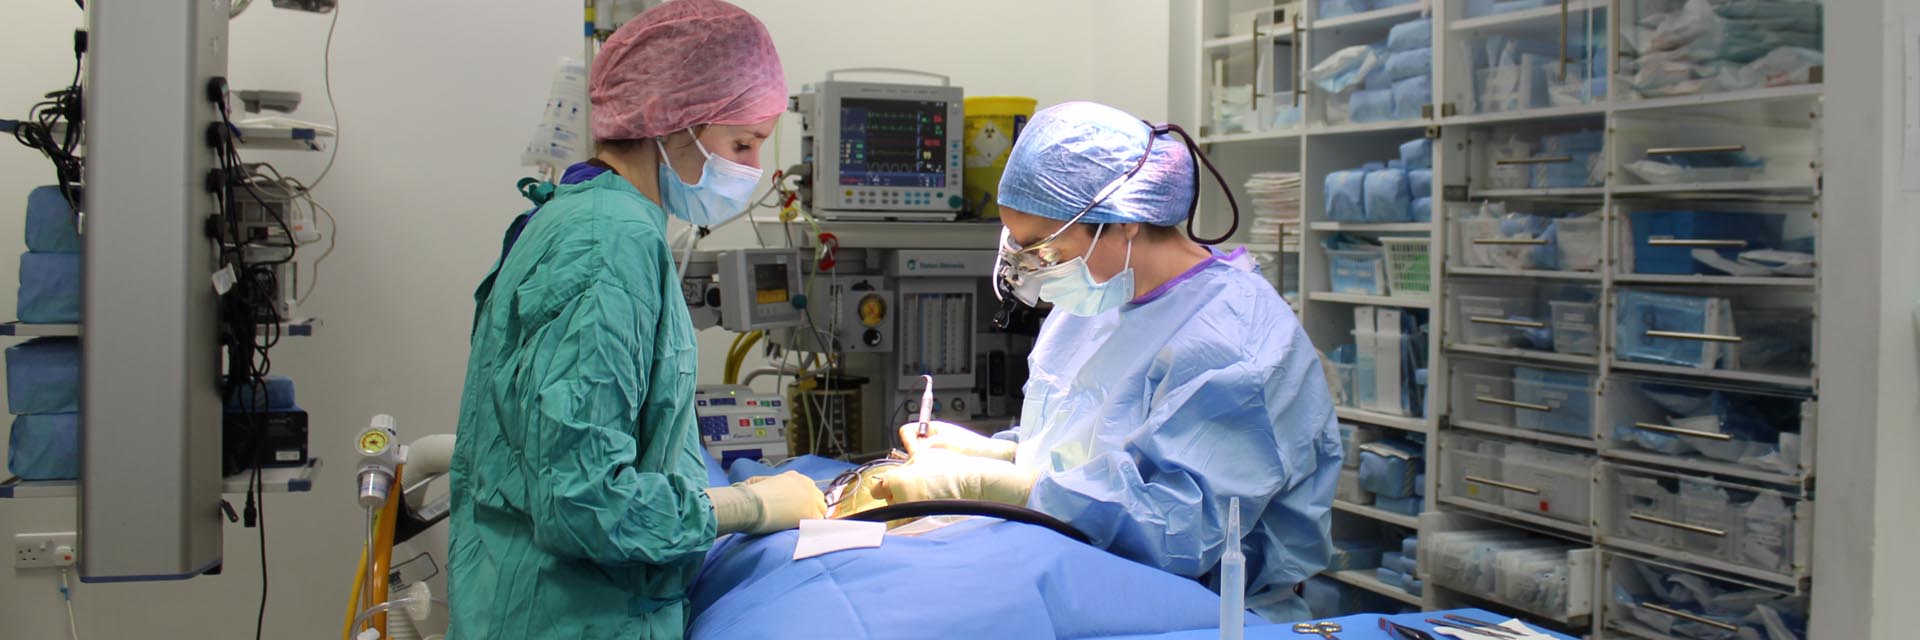 Neurology Registrar and Intern in surgery